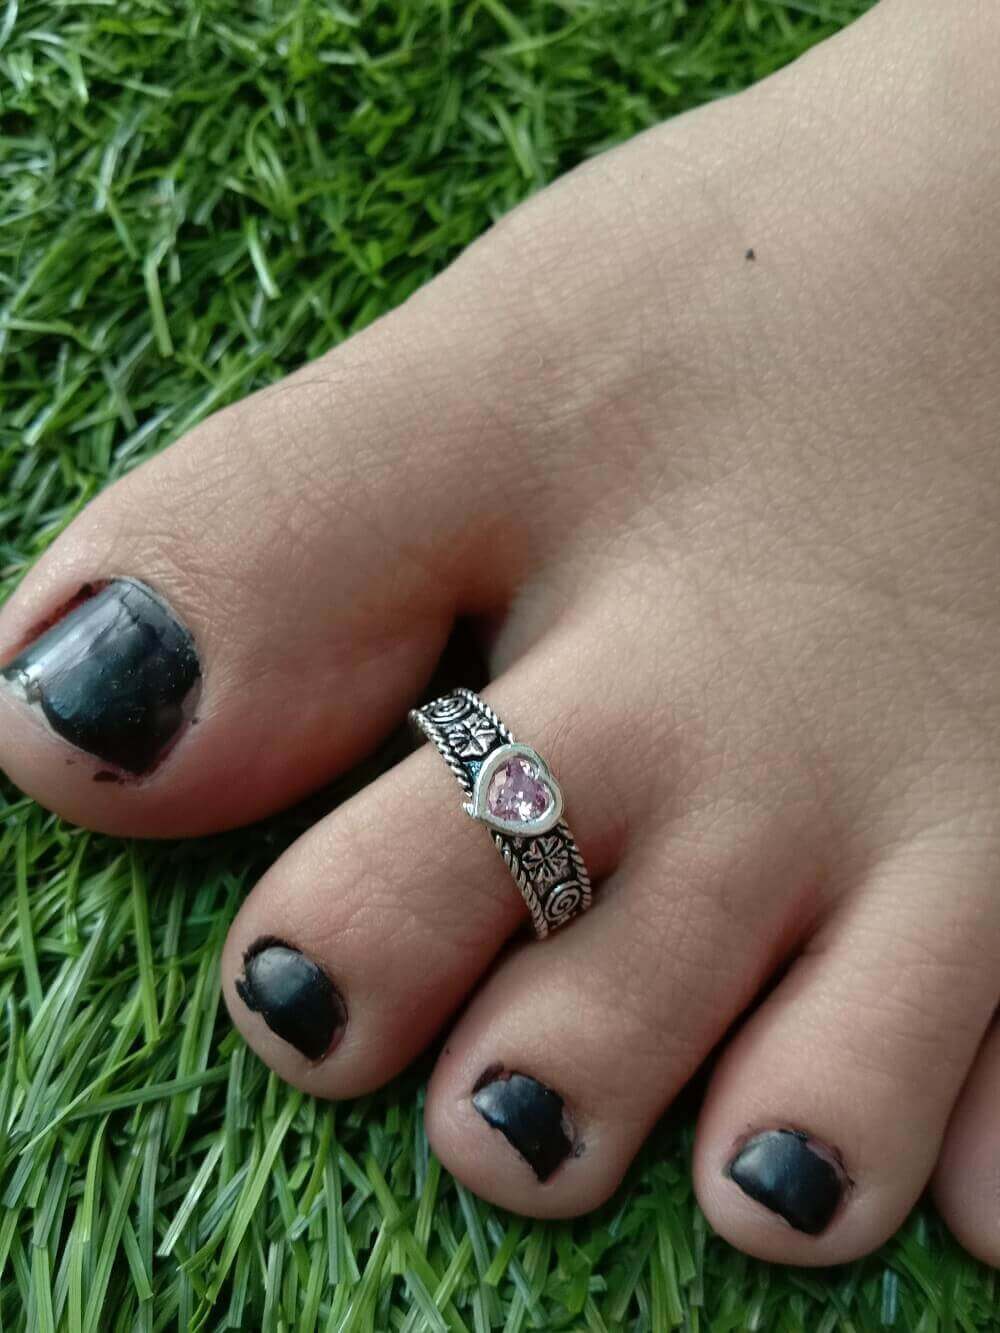 Stone Toe Rings for women - Silver Oxidised Toe Rings by Silverlinings